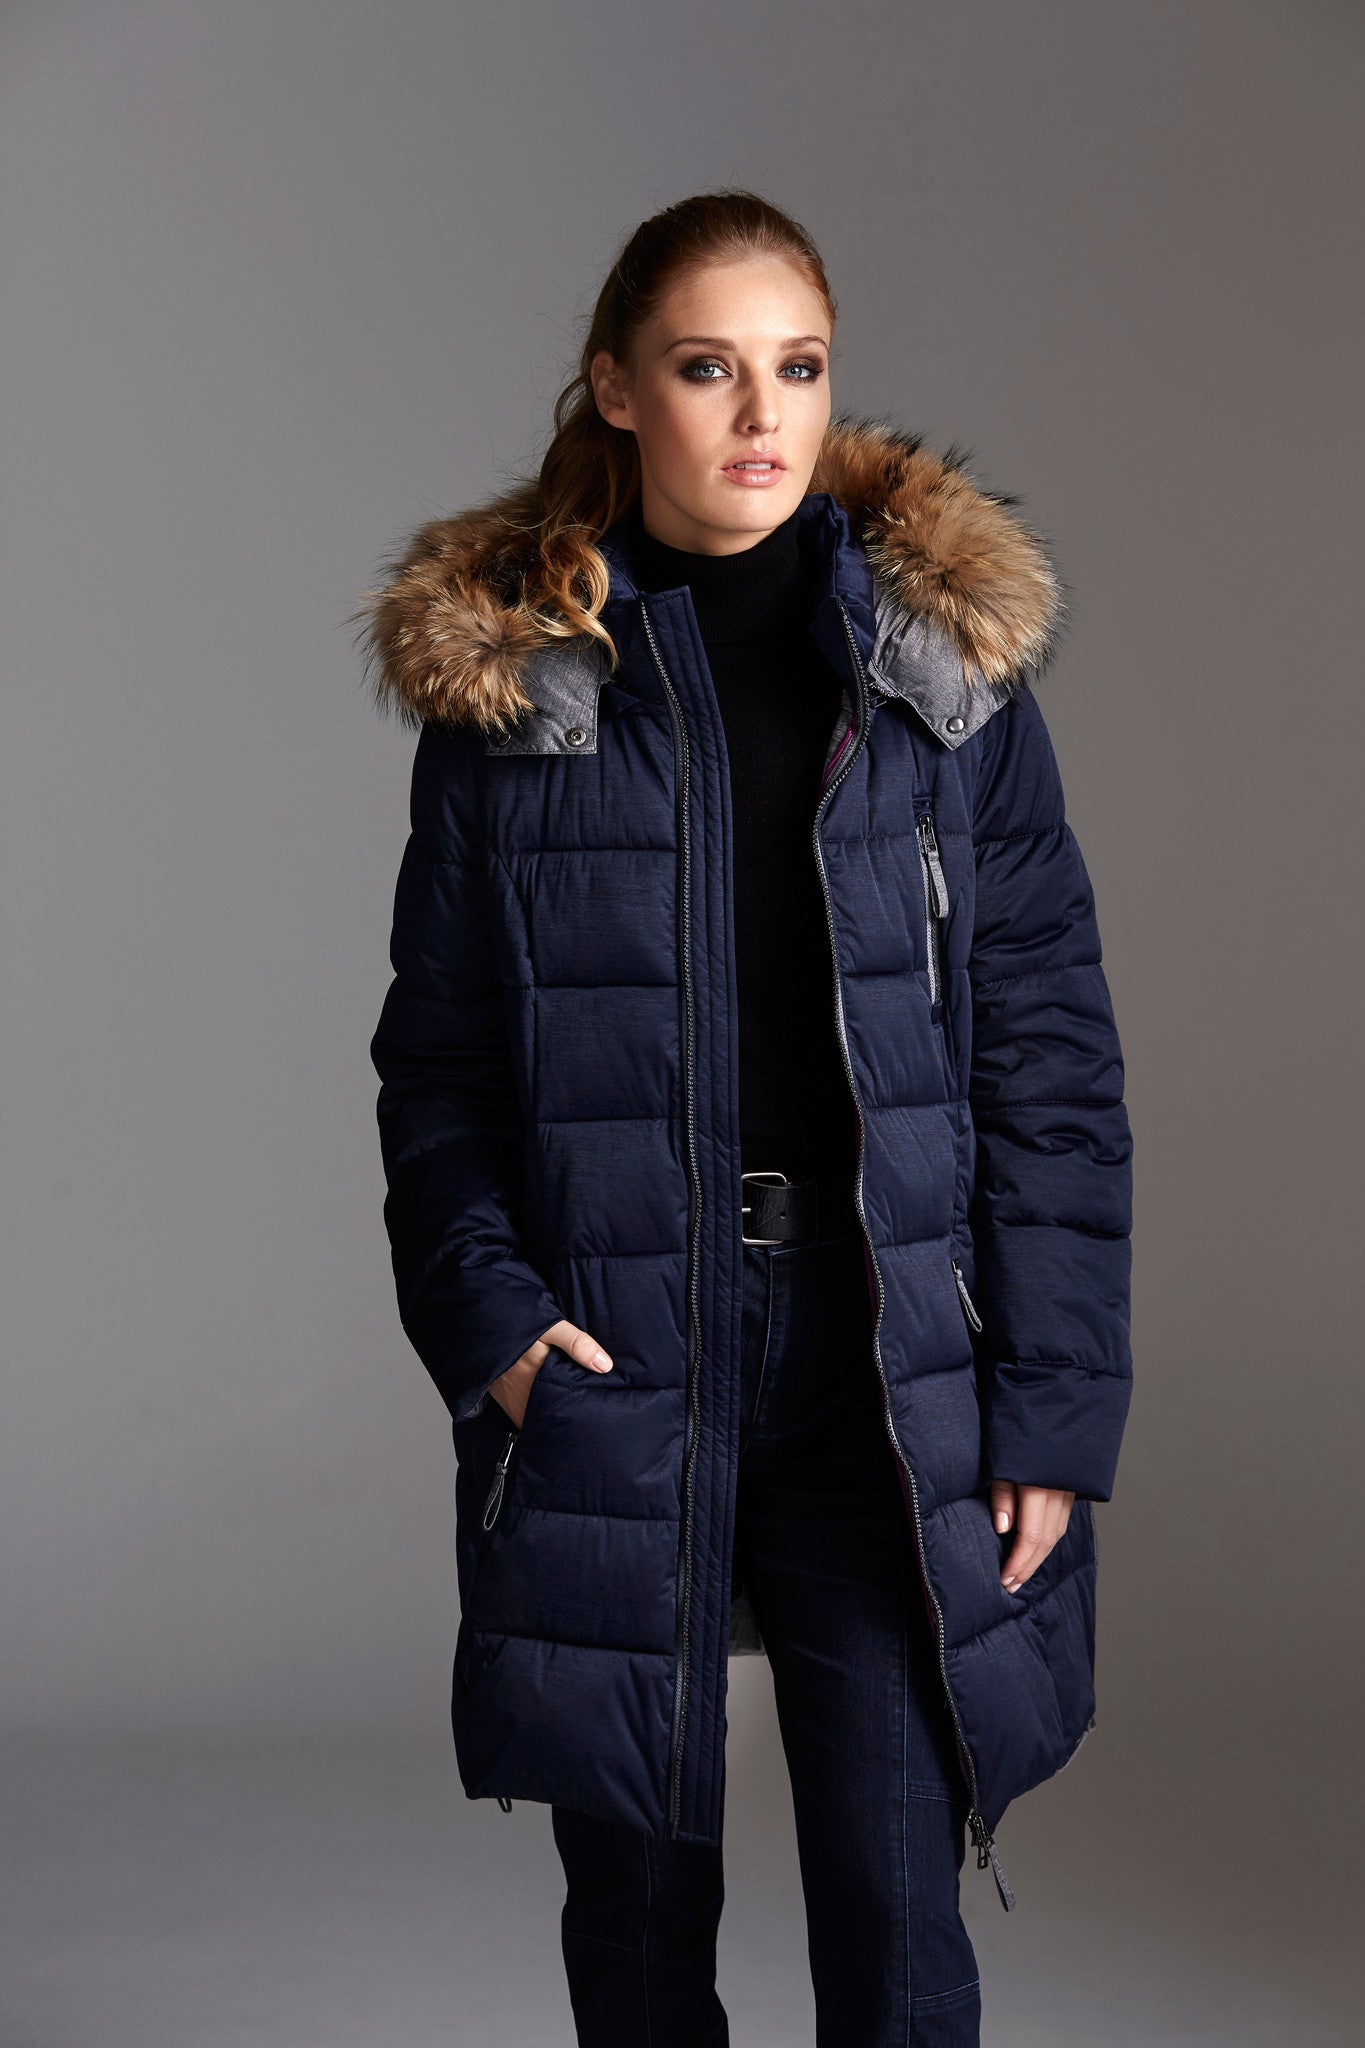 Nuage Coats Canada, Arctic Expedition Coats, Etage Coats, Nuage Coats USA